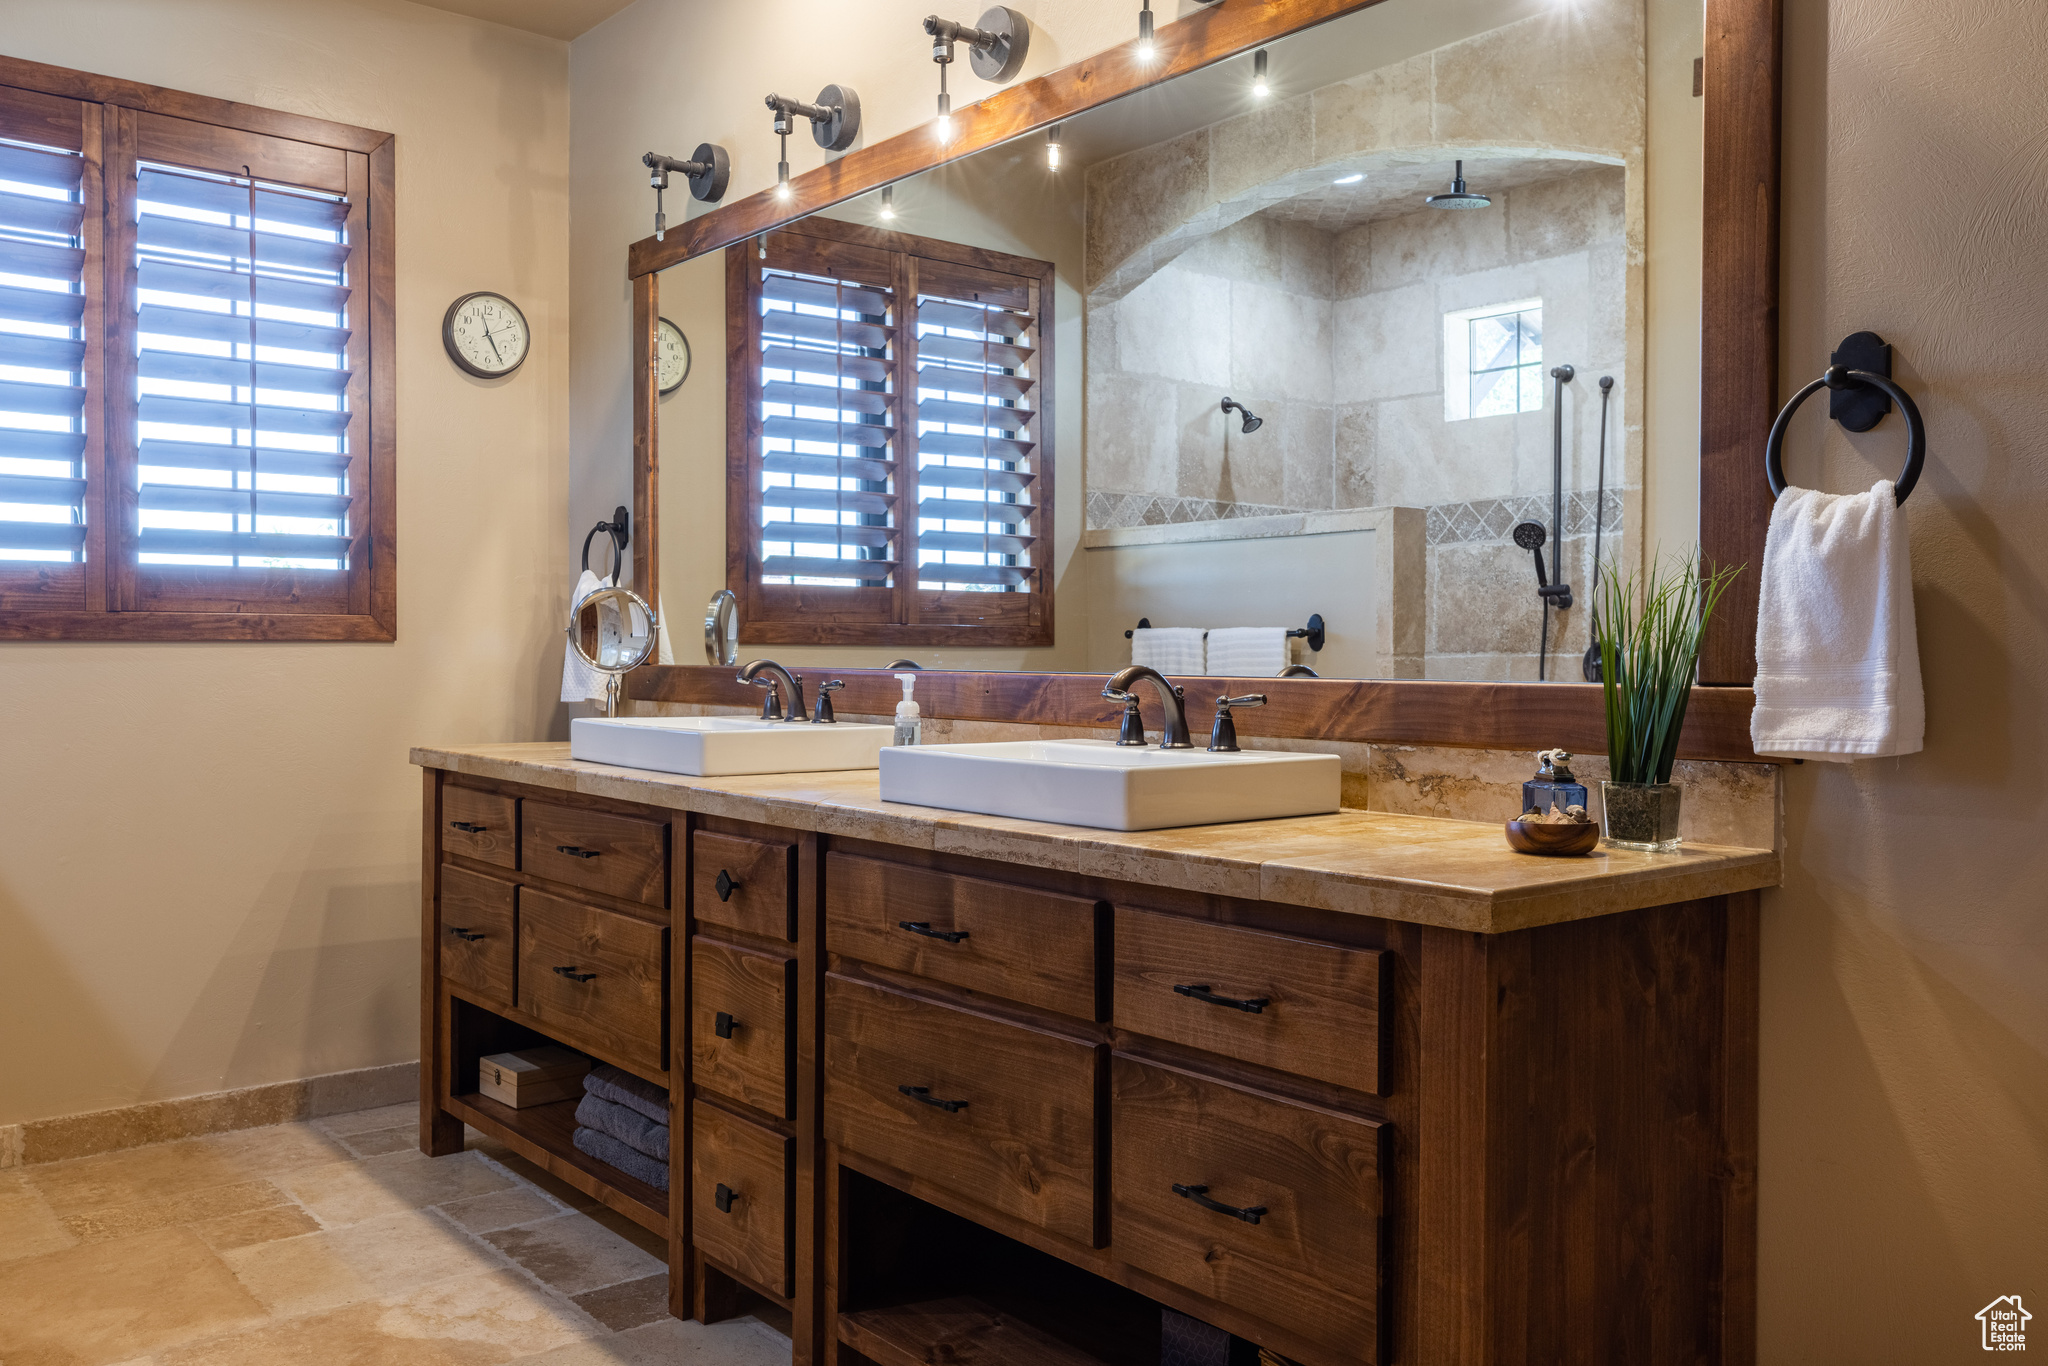 Principle suite Bathroom featuring tile floors, dual bowl vanity, and a tile shower